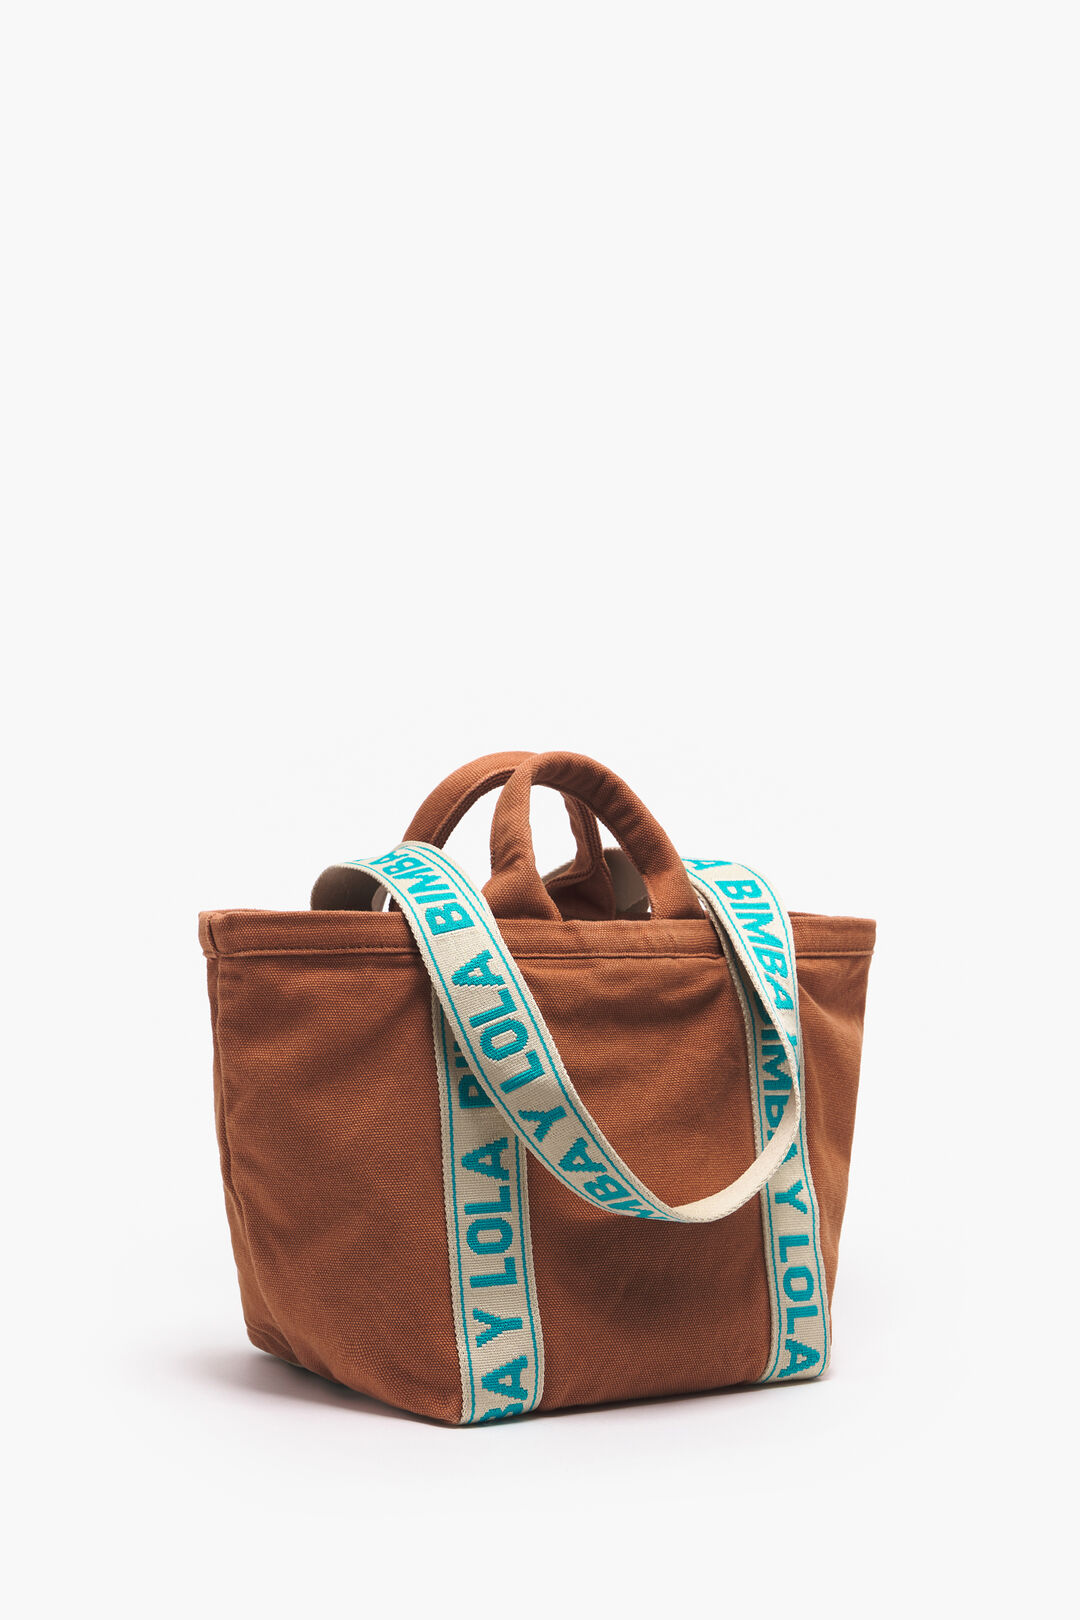 S tan canvas shopper bag